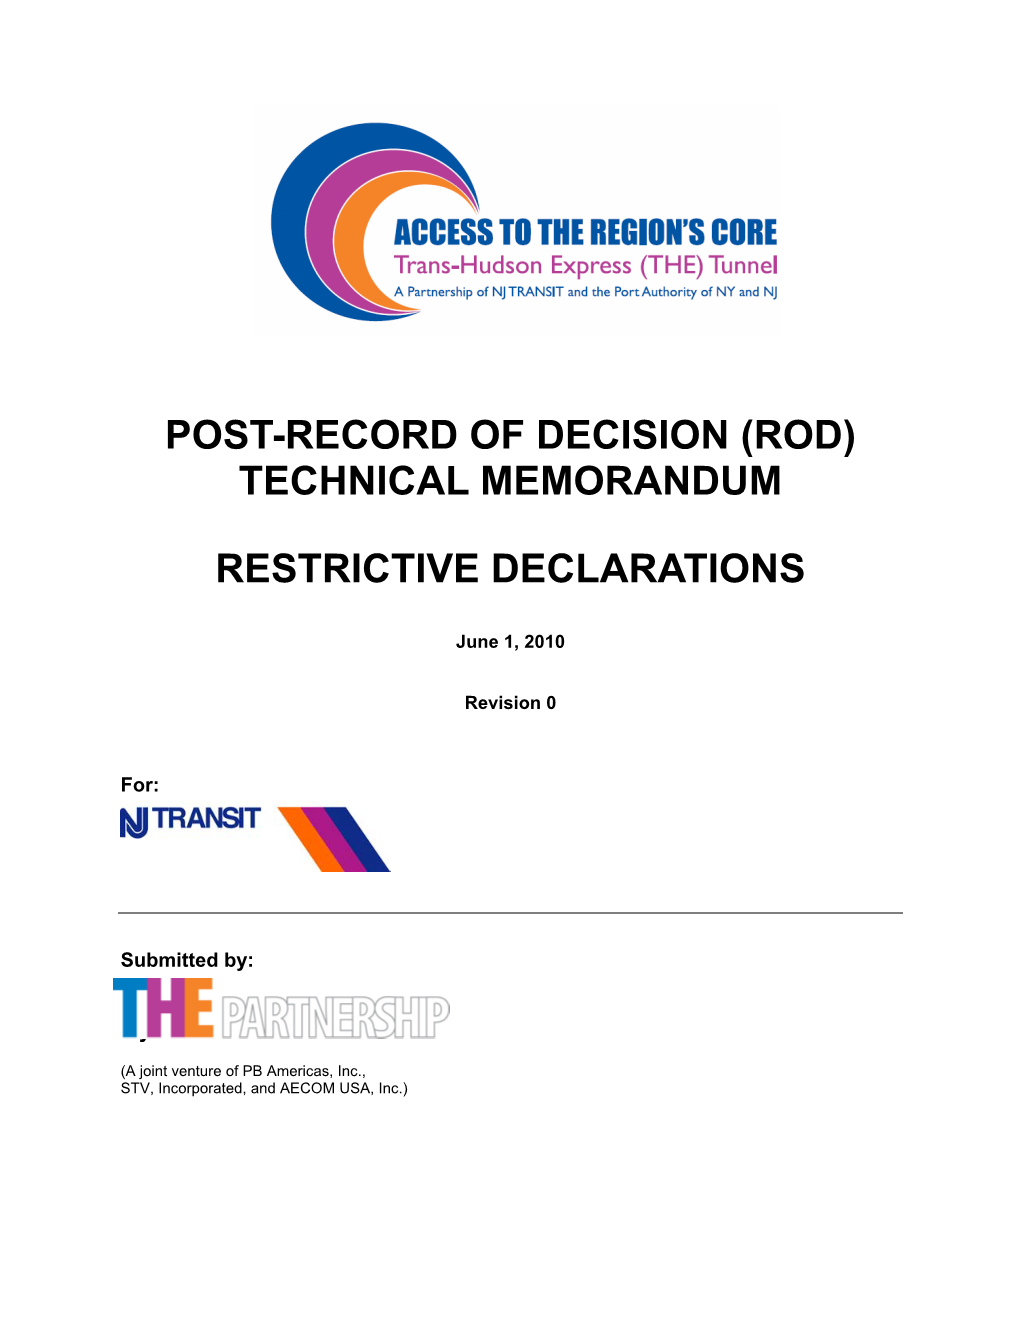 Technical Memorandum Restrictive Declarations